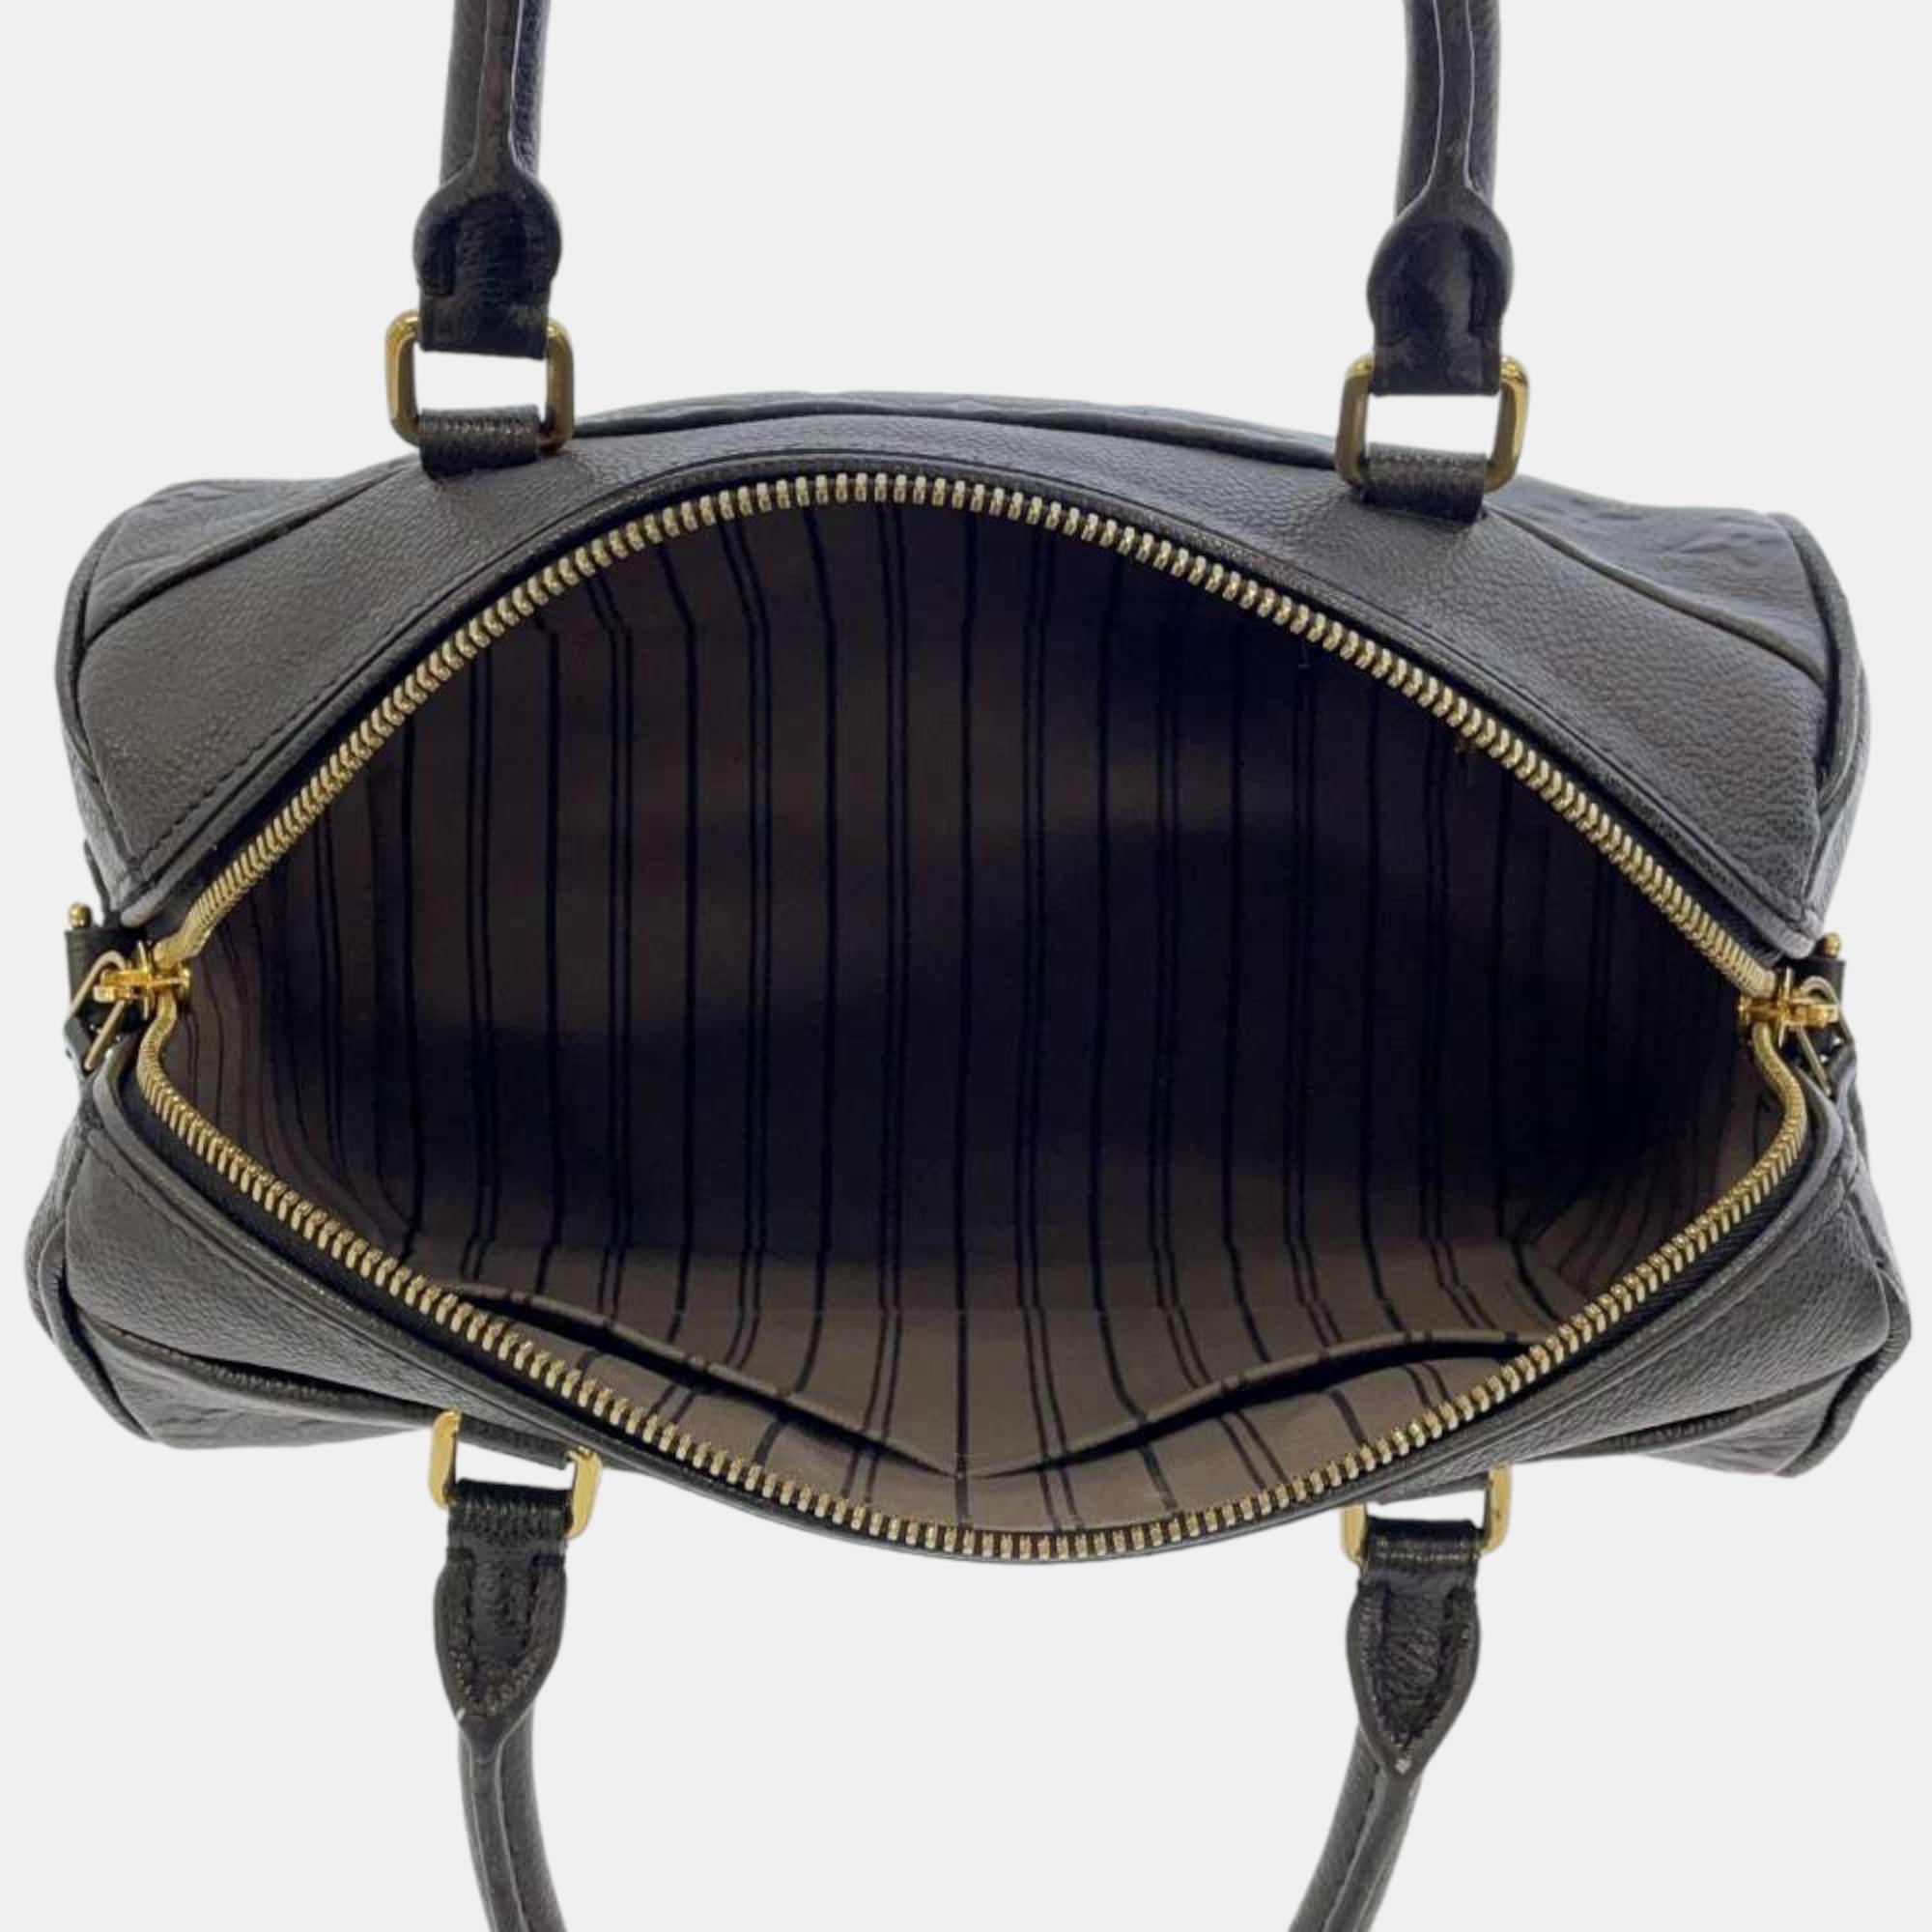 Louis Vuitton Black Monogram Empreinte Leather Speedy Bandouliere 25